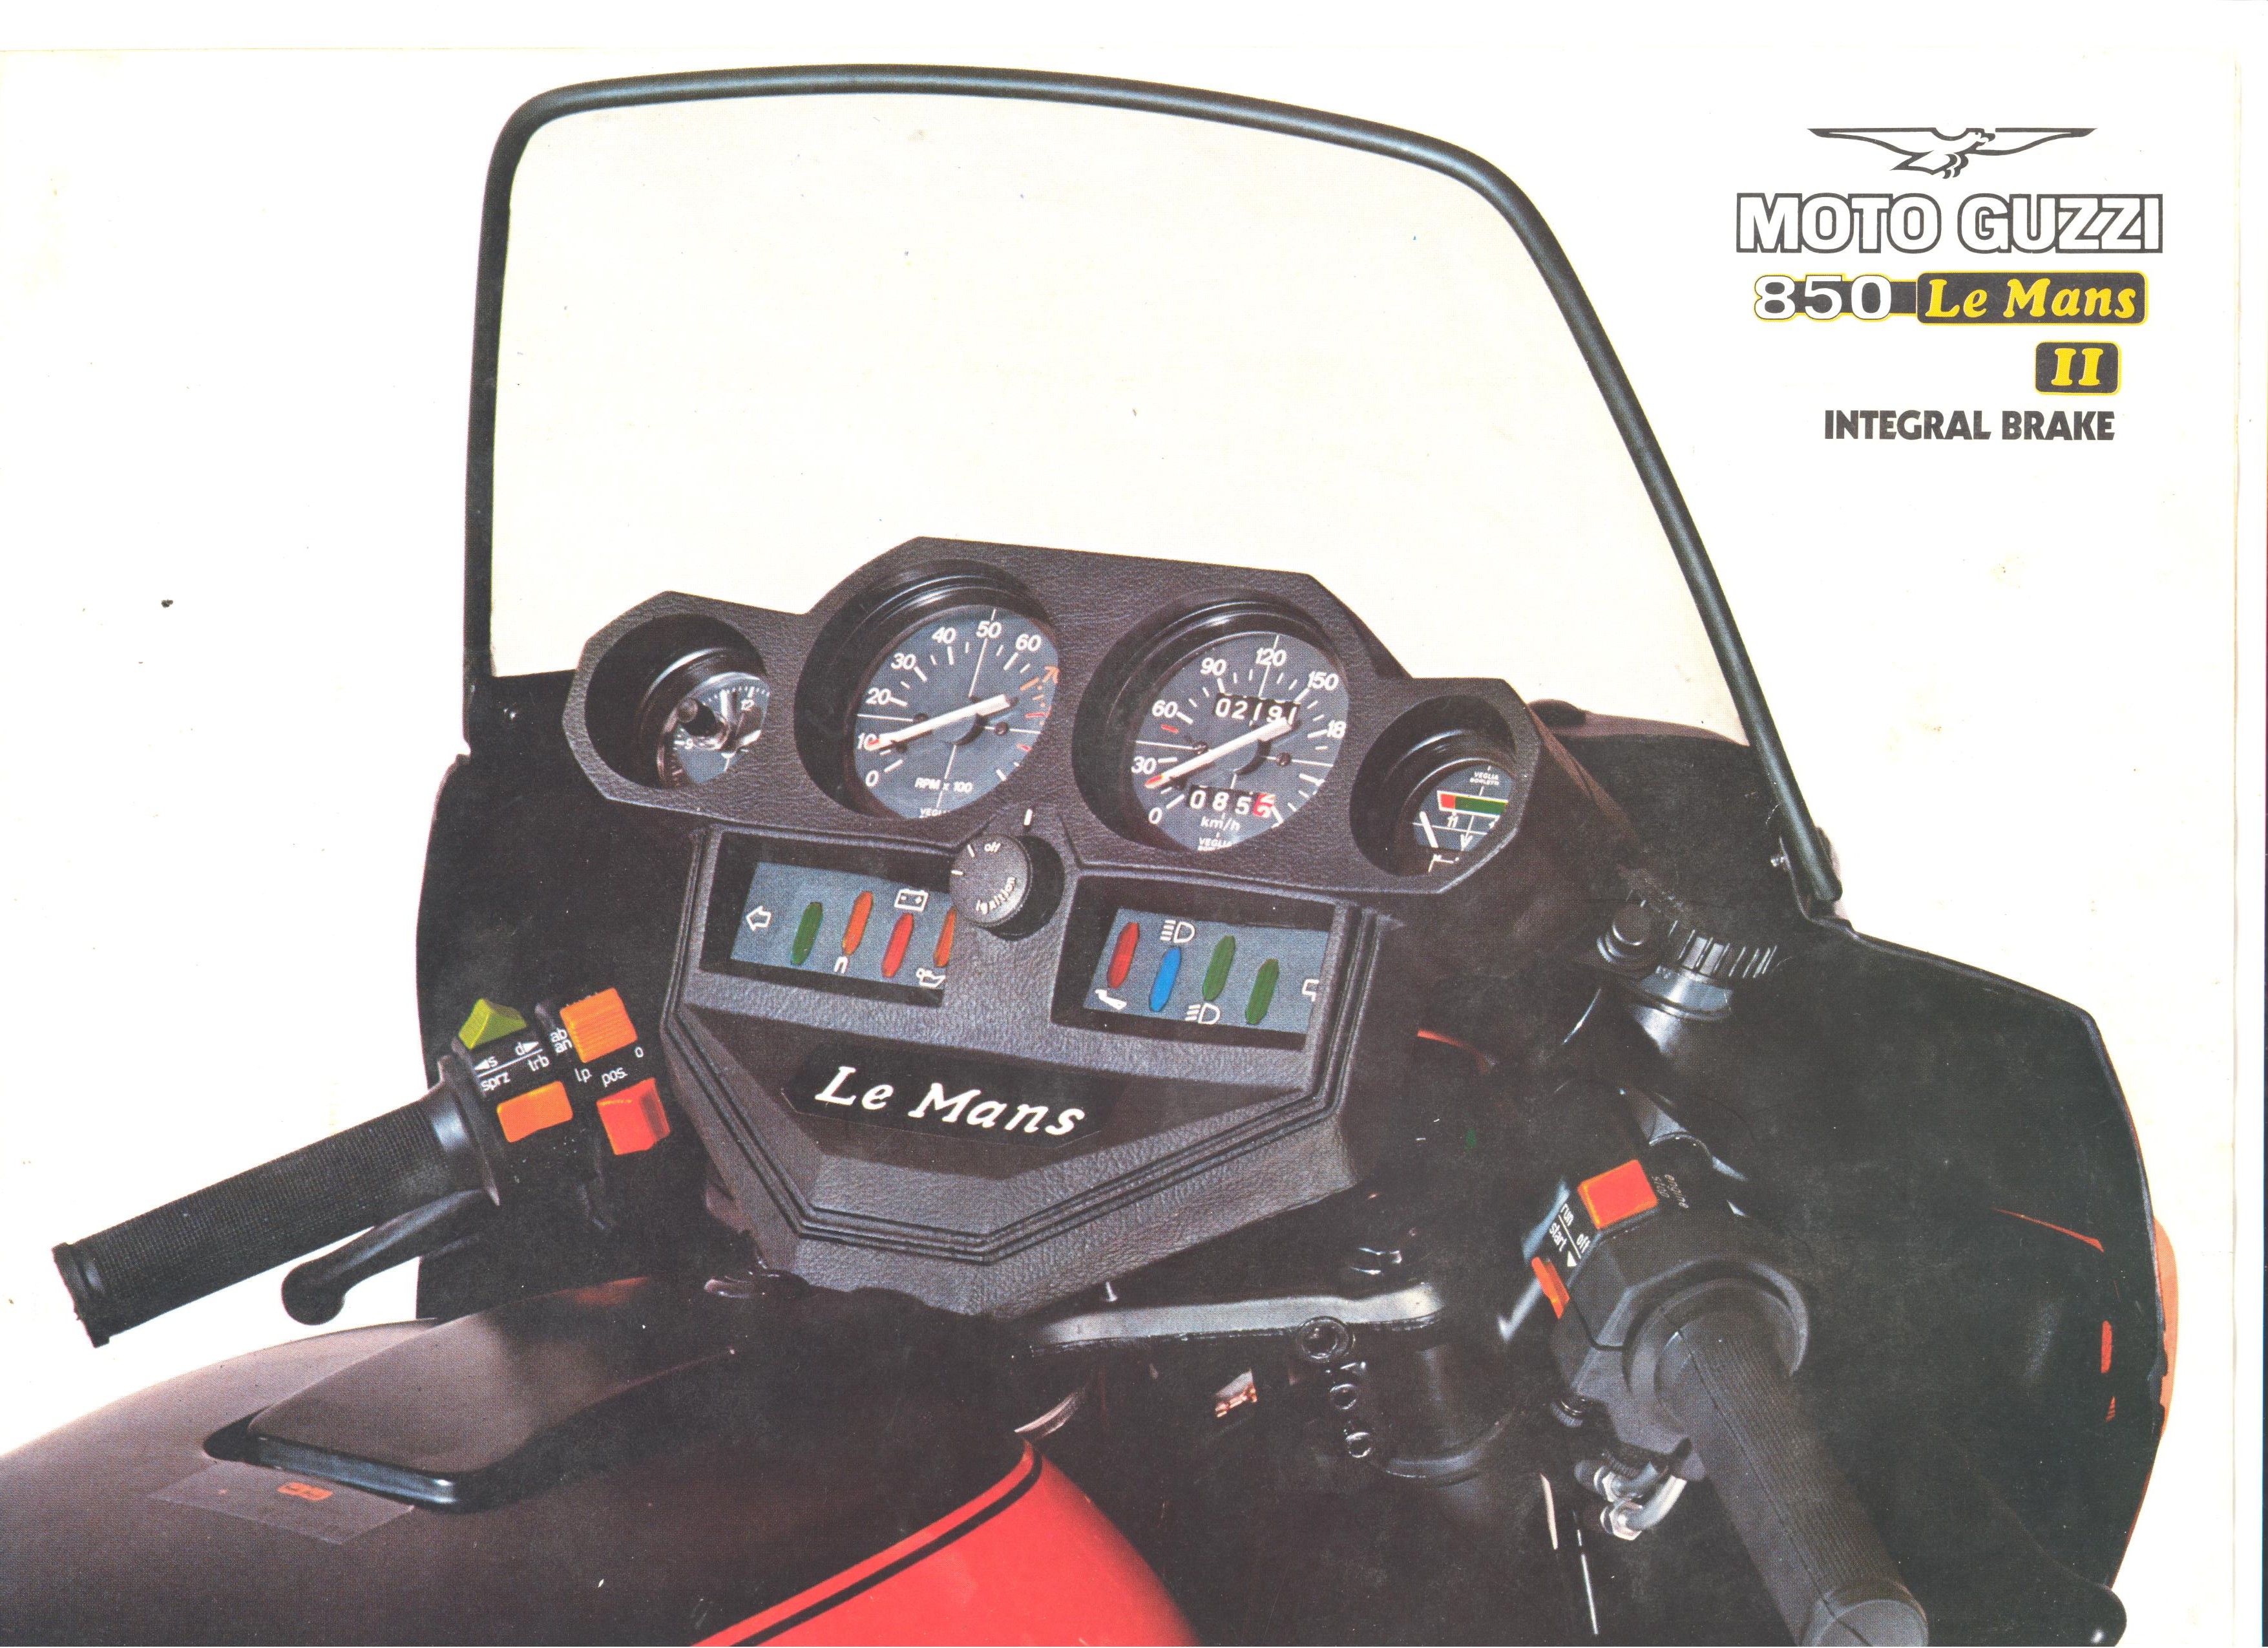 Moto Guzzi factory brochure: 850 Le Mans II